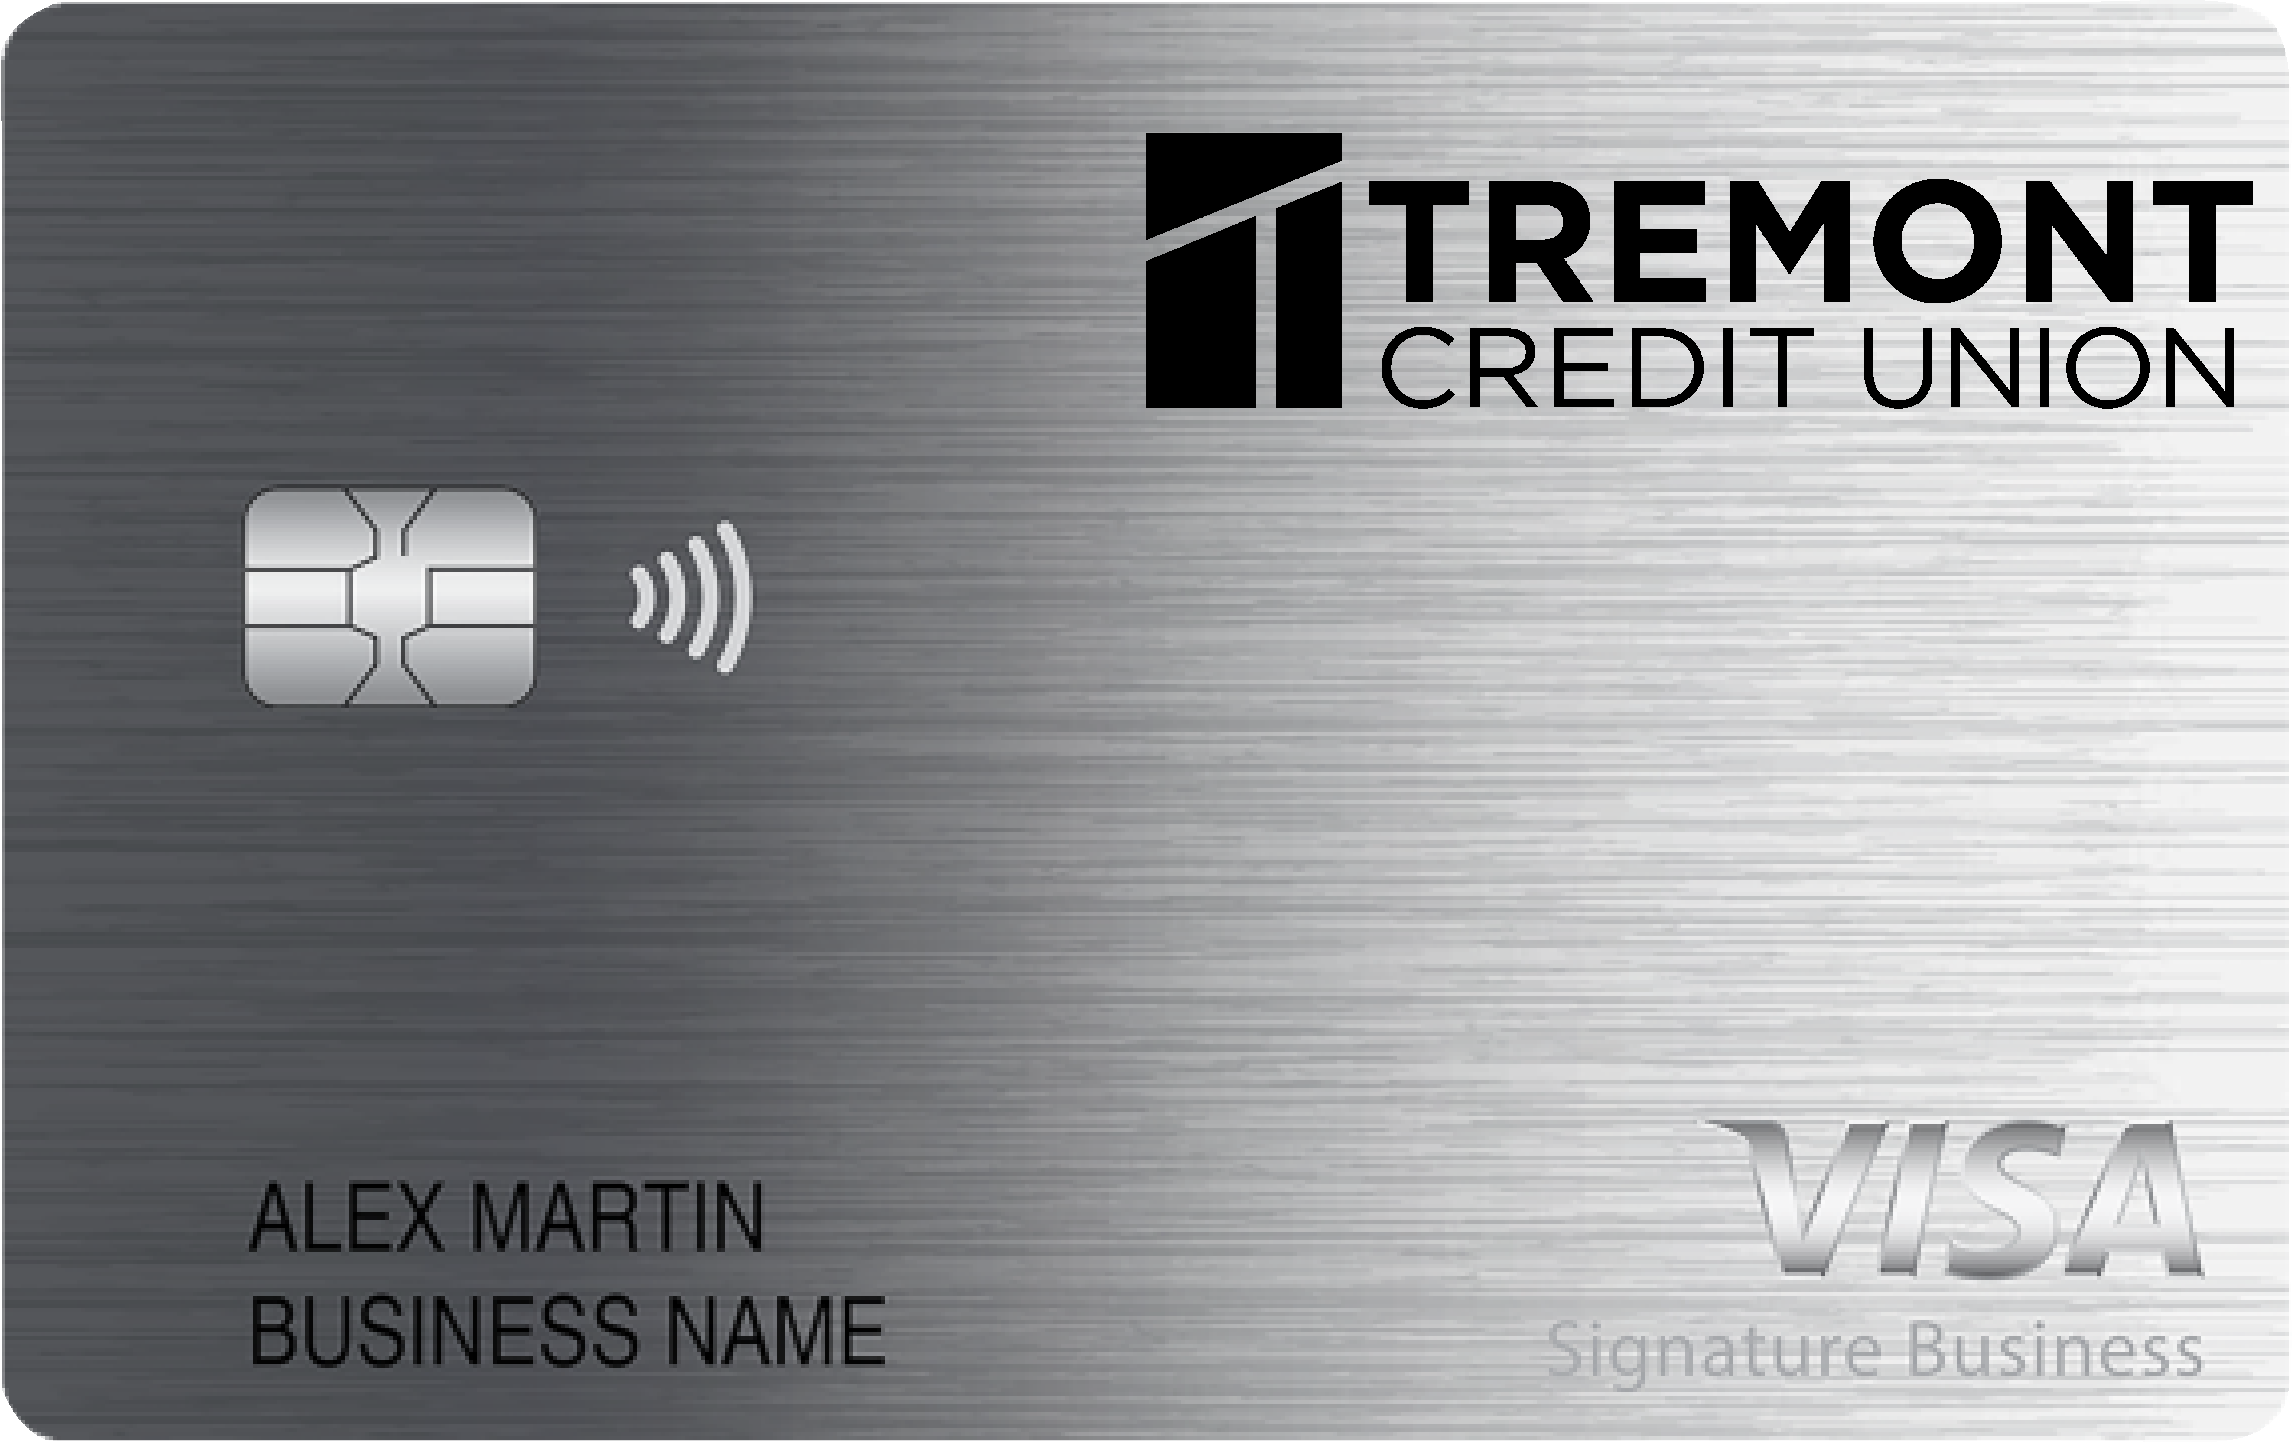 Tremont Credit Union Smart Business Rewards Card